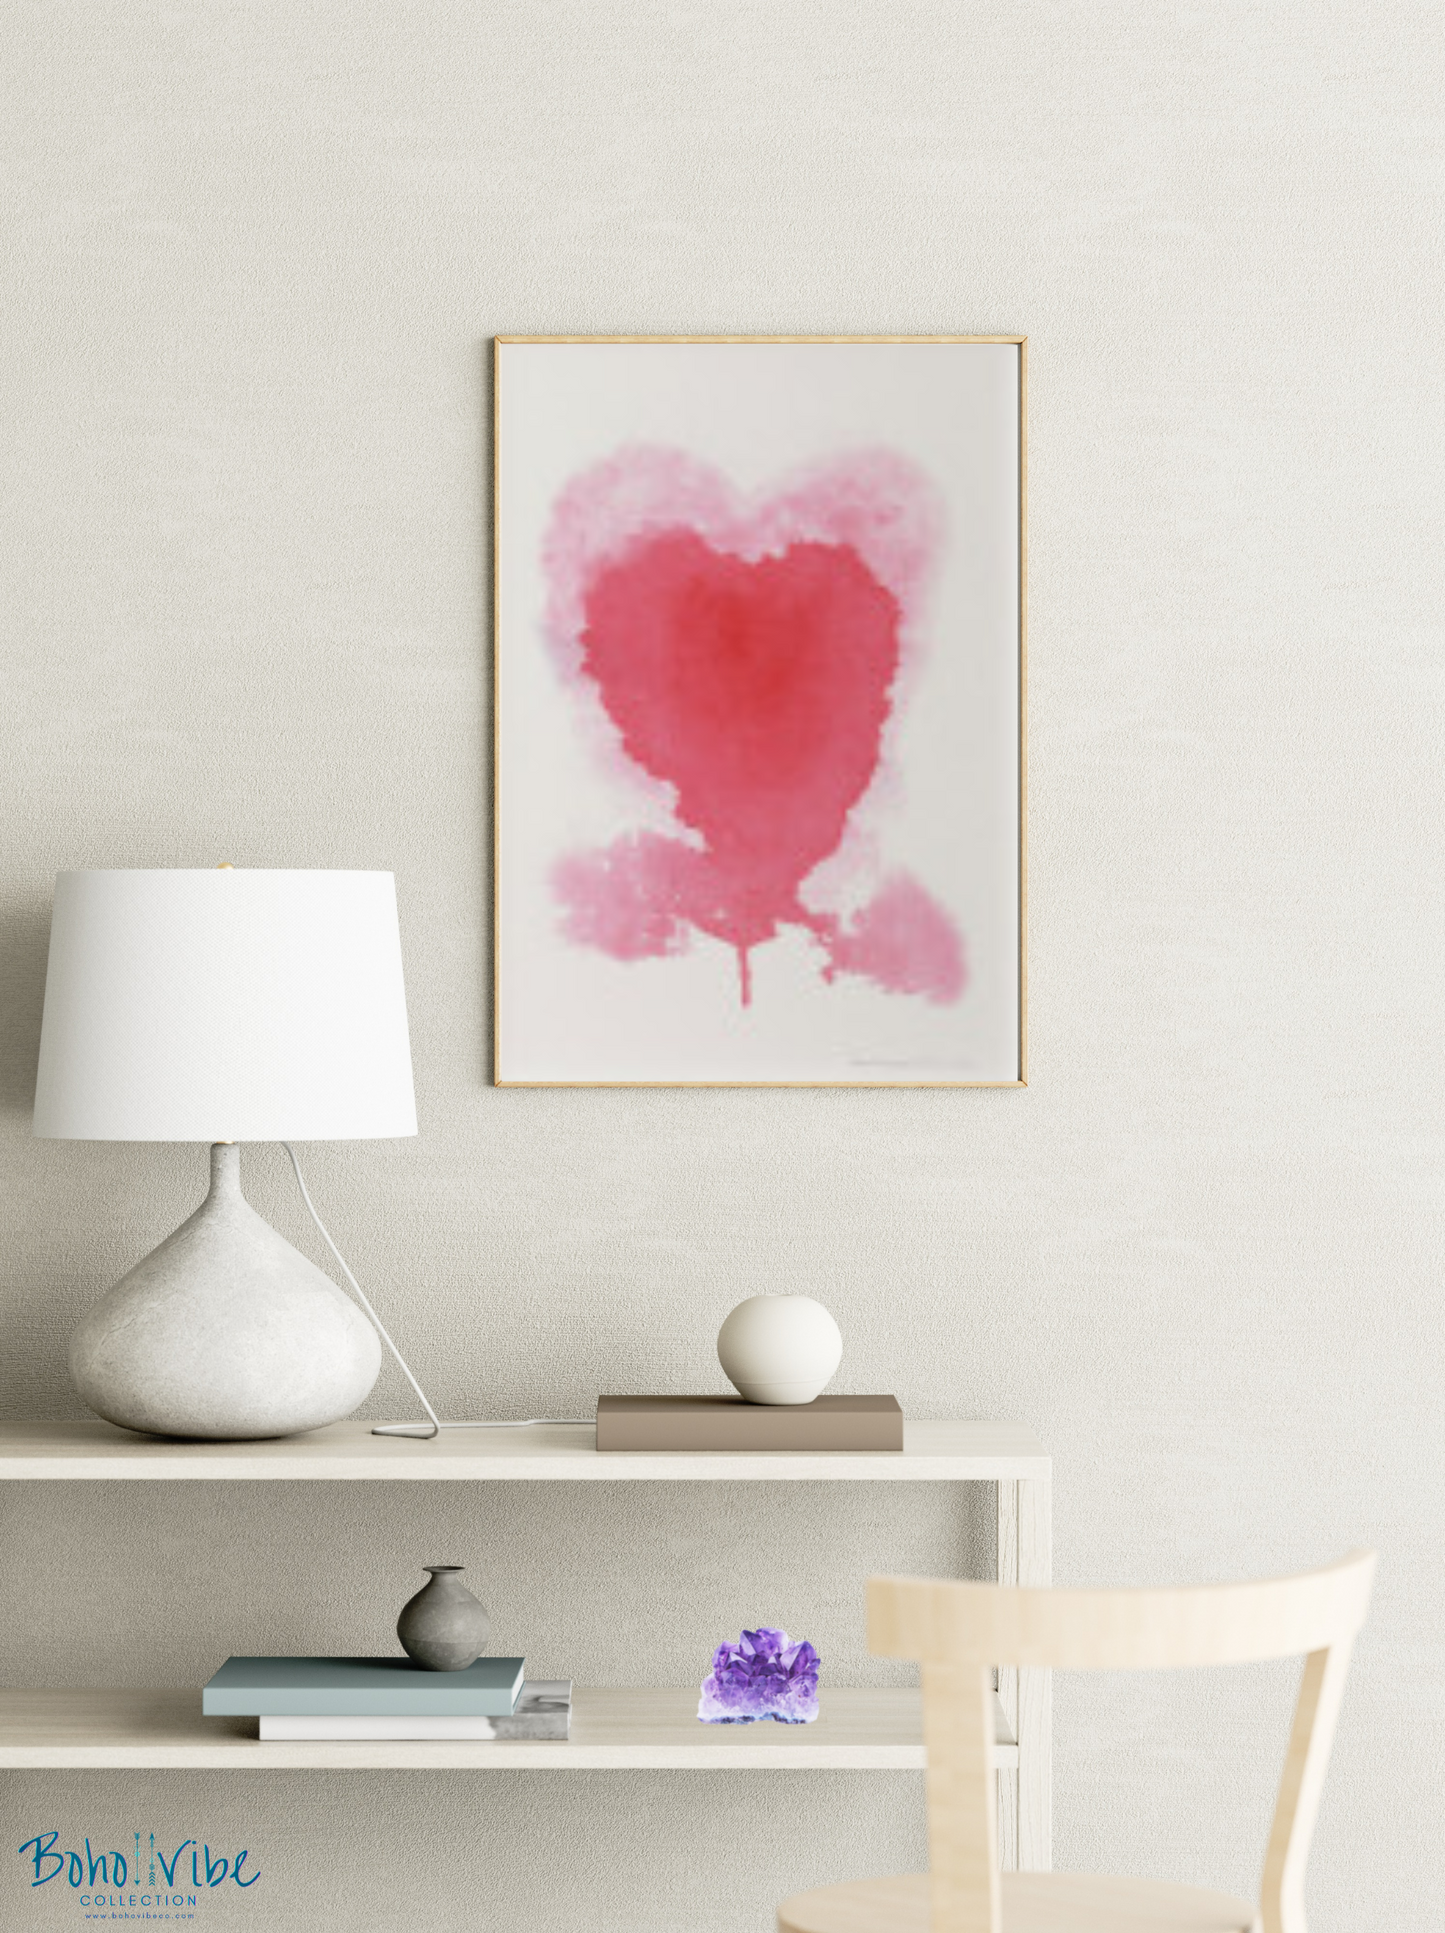 Boho ↡↟ Vibe Collection ↠ The Art of Love Watercolour Boho Heart Wall Poster Print 